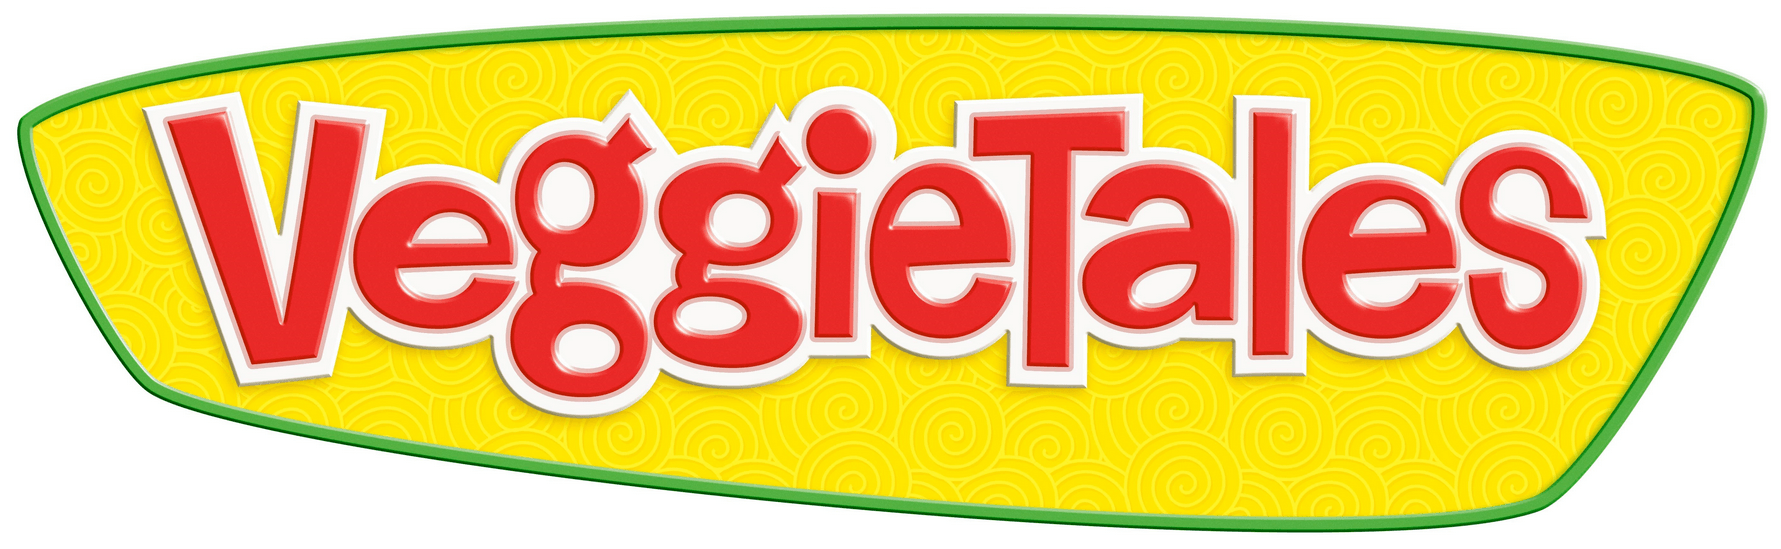 VeggieTales Logo - VeggieTales | Universal Animation Fan Wiki | FANDOM powered by Wikia